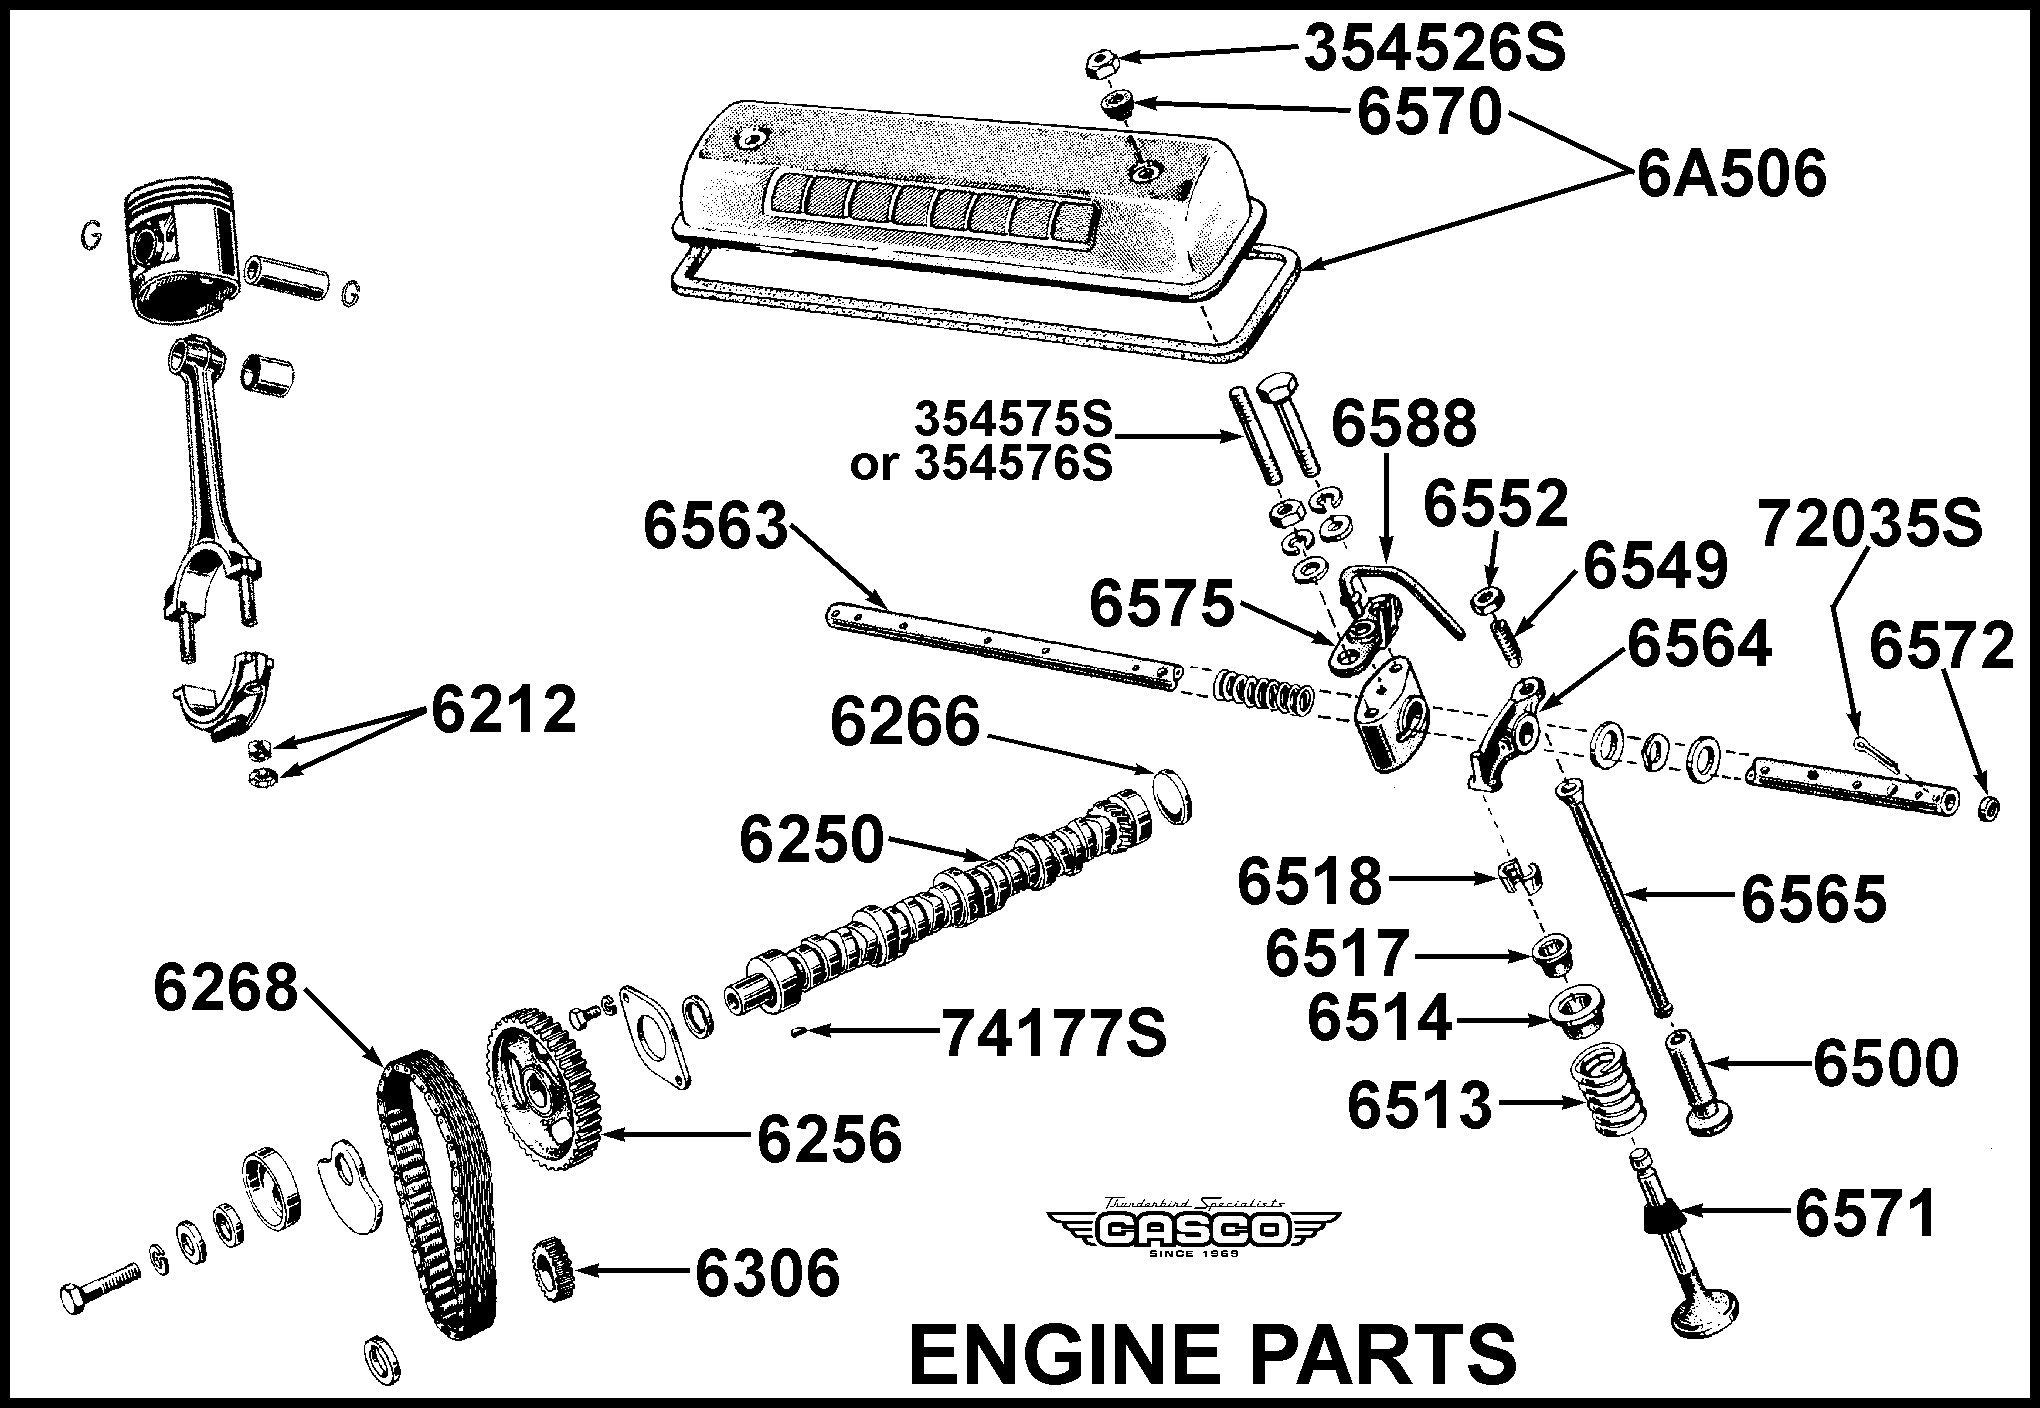 Pushrod Engine Diagram Push Rod Valve 55 292 Engine order 16 Per Car Classictbird Of Pushrod Engine Diagram